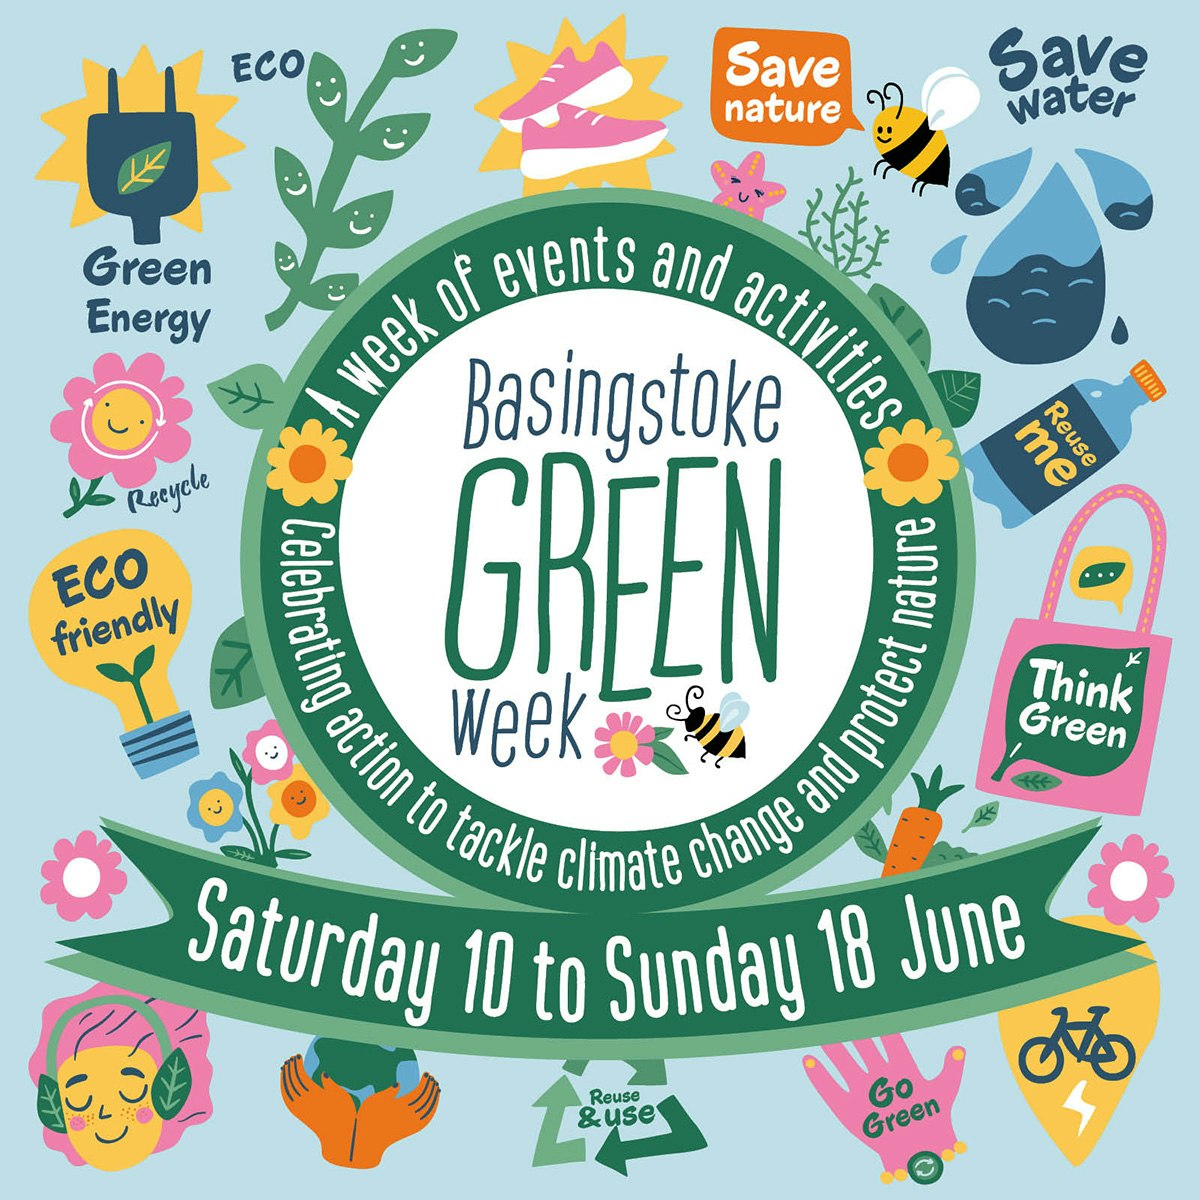 Basingstoke Green Week. Saturday 10 to Sunday 18 June.